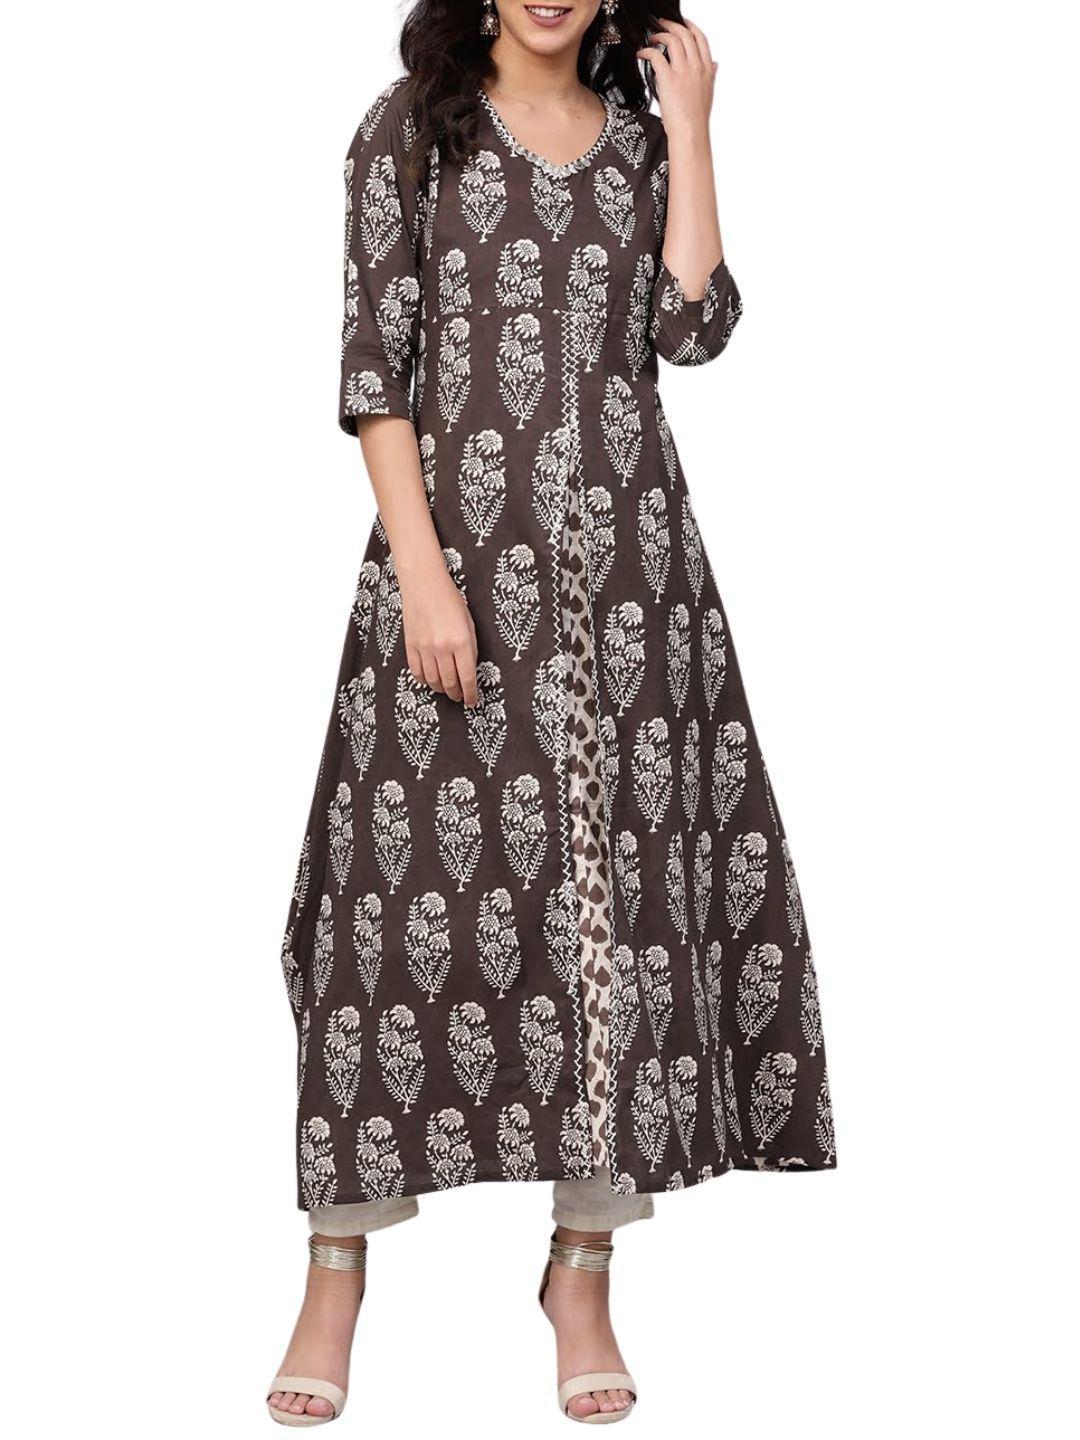 double-layered-brown-cotton-kurta-10001010BR, Women Indian Ethnic Clothing, Cotton Kurta